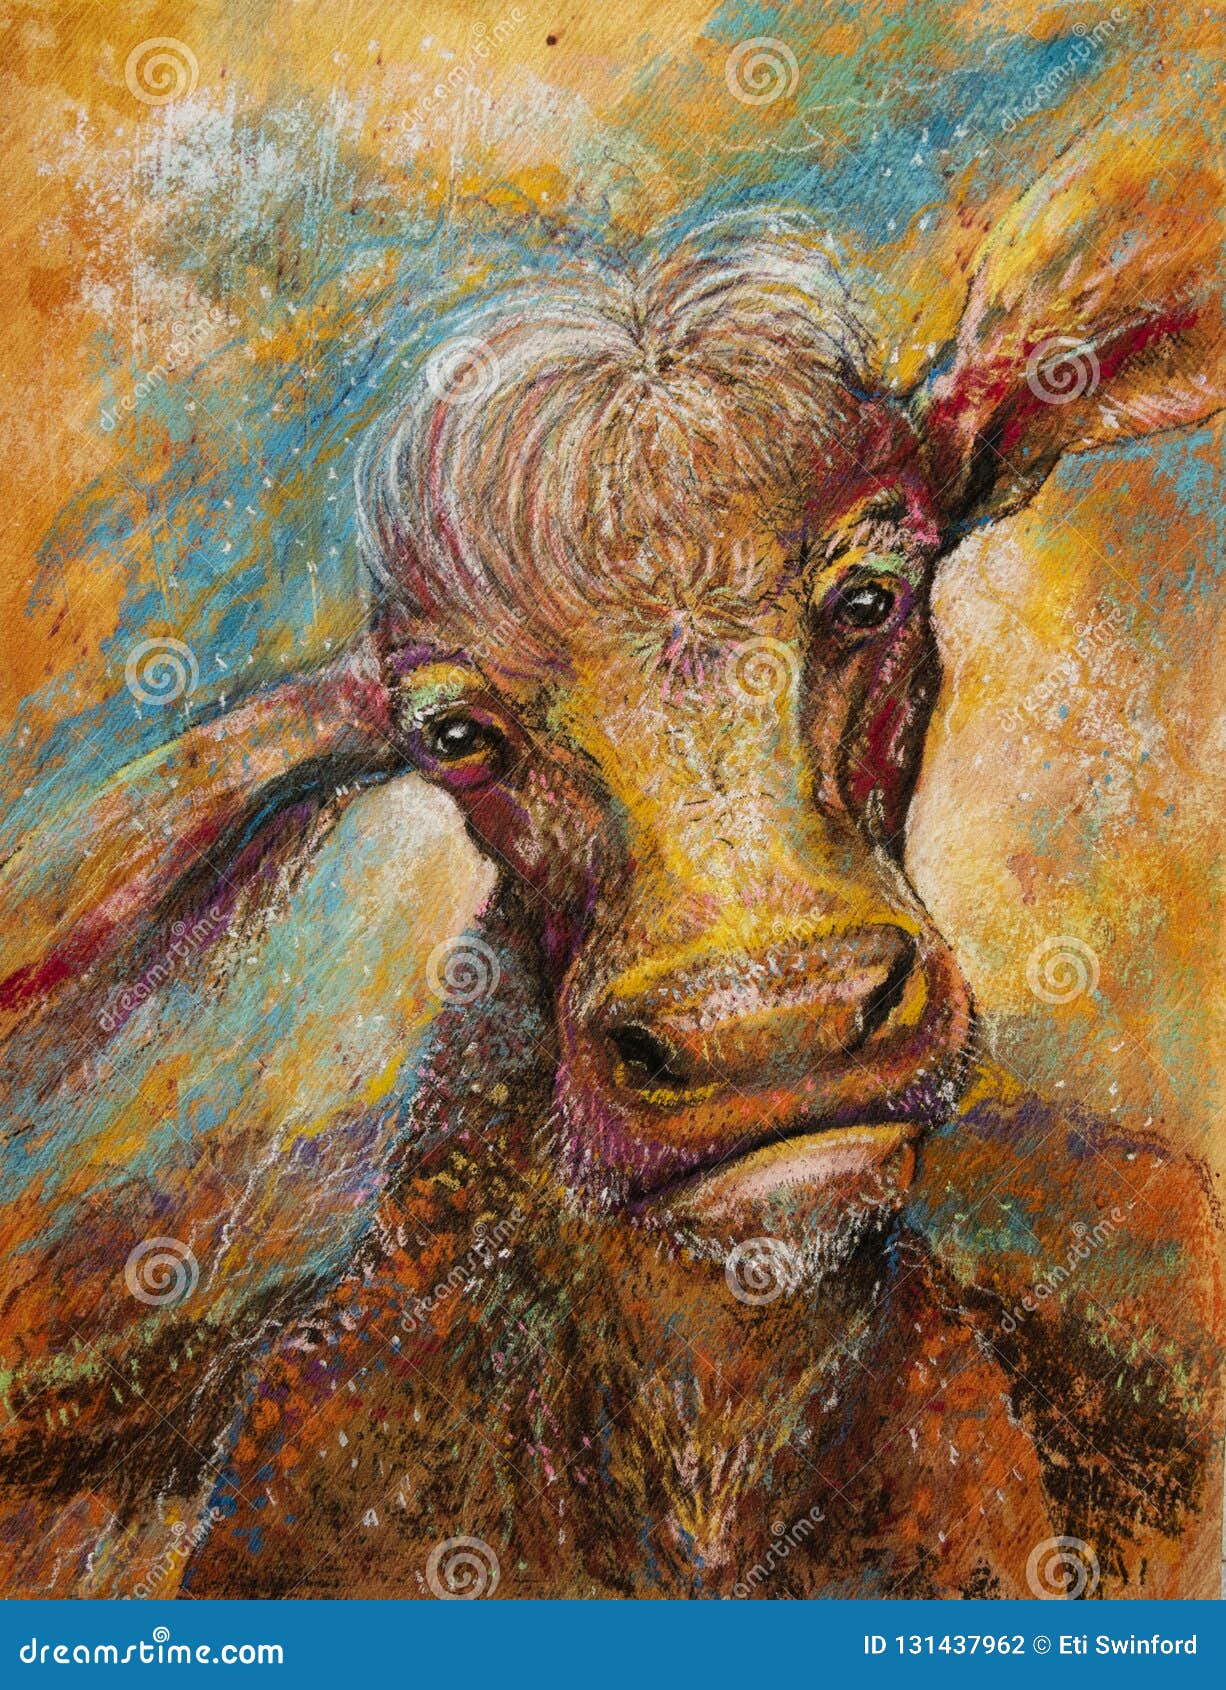 cosmic cow art